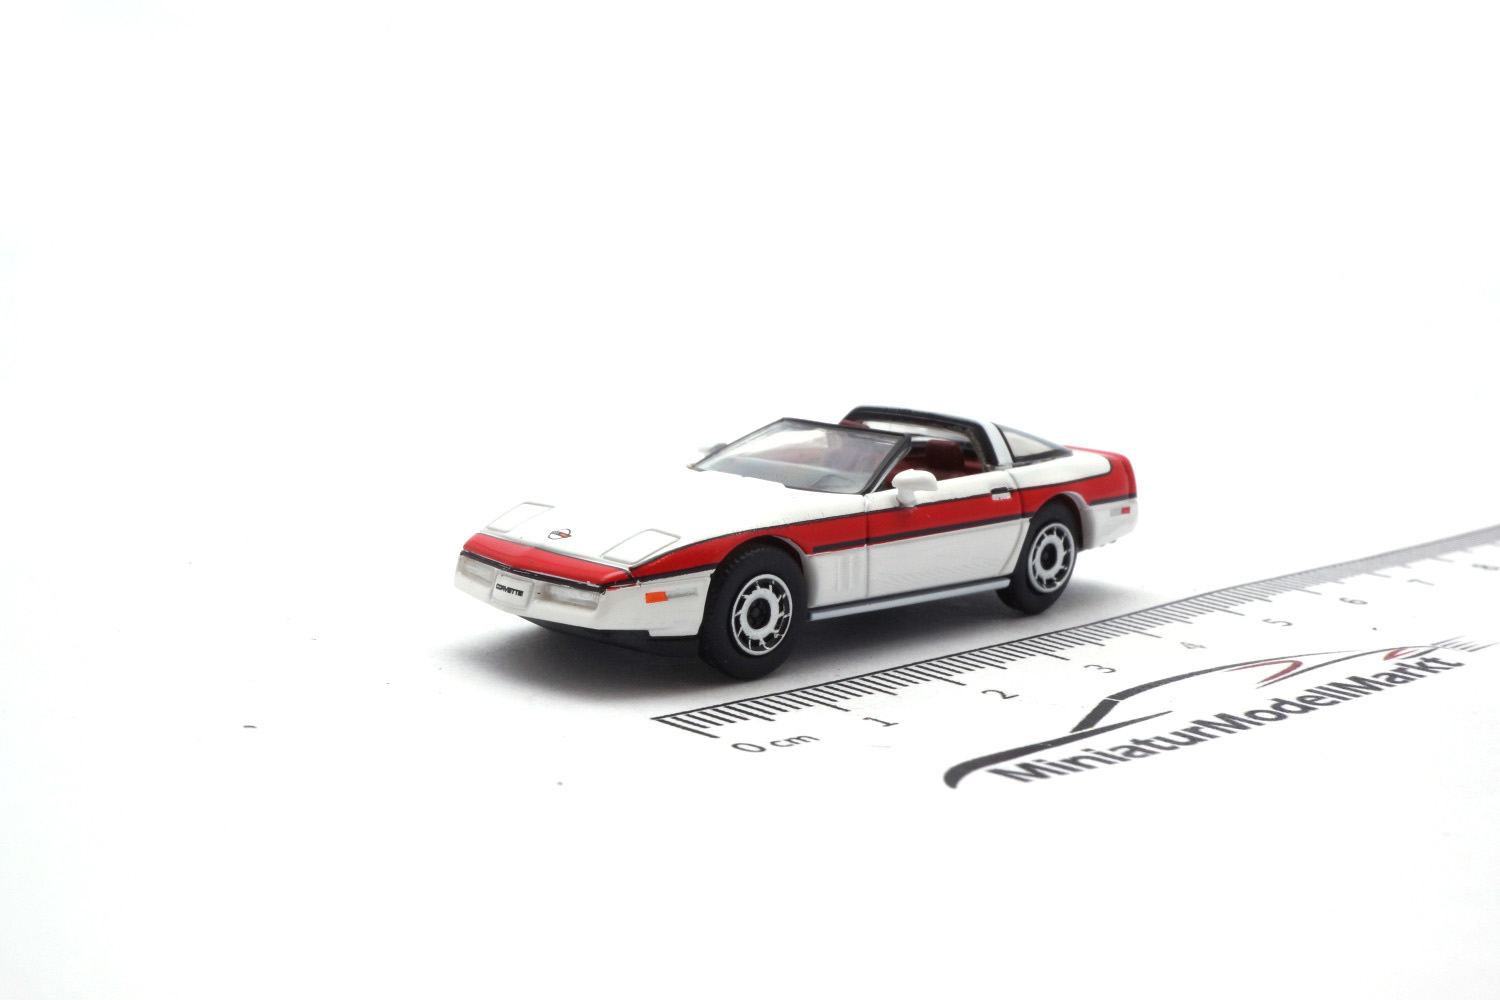 PCX87 PCX870319 Chevrolet Corvette C4, weiss/rot, Targadach liegt ein, 1984 1:87